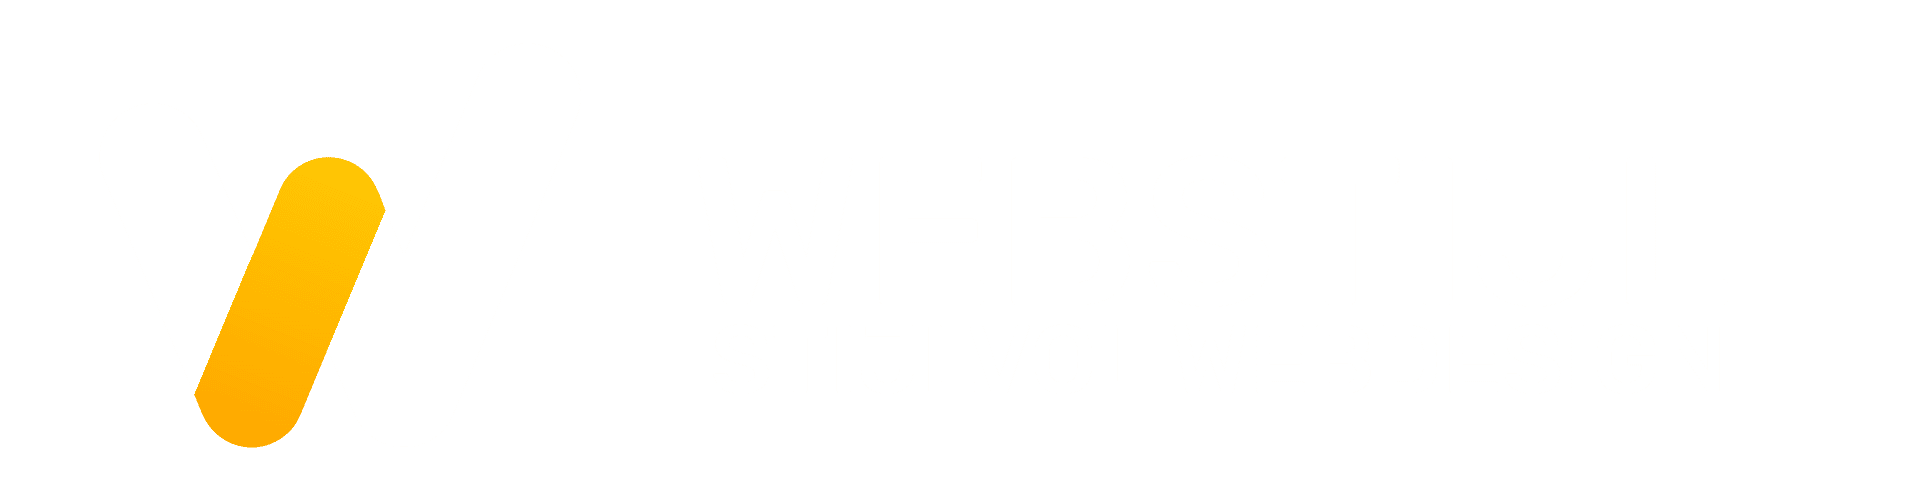 WEBSTIJL - Stijlvol webdesign